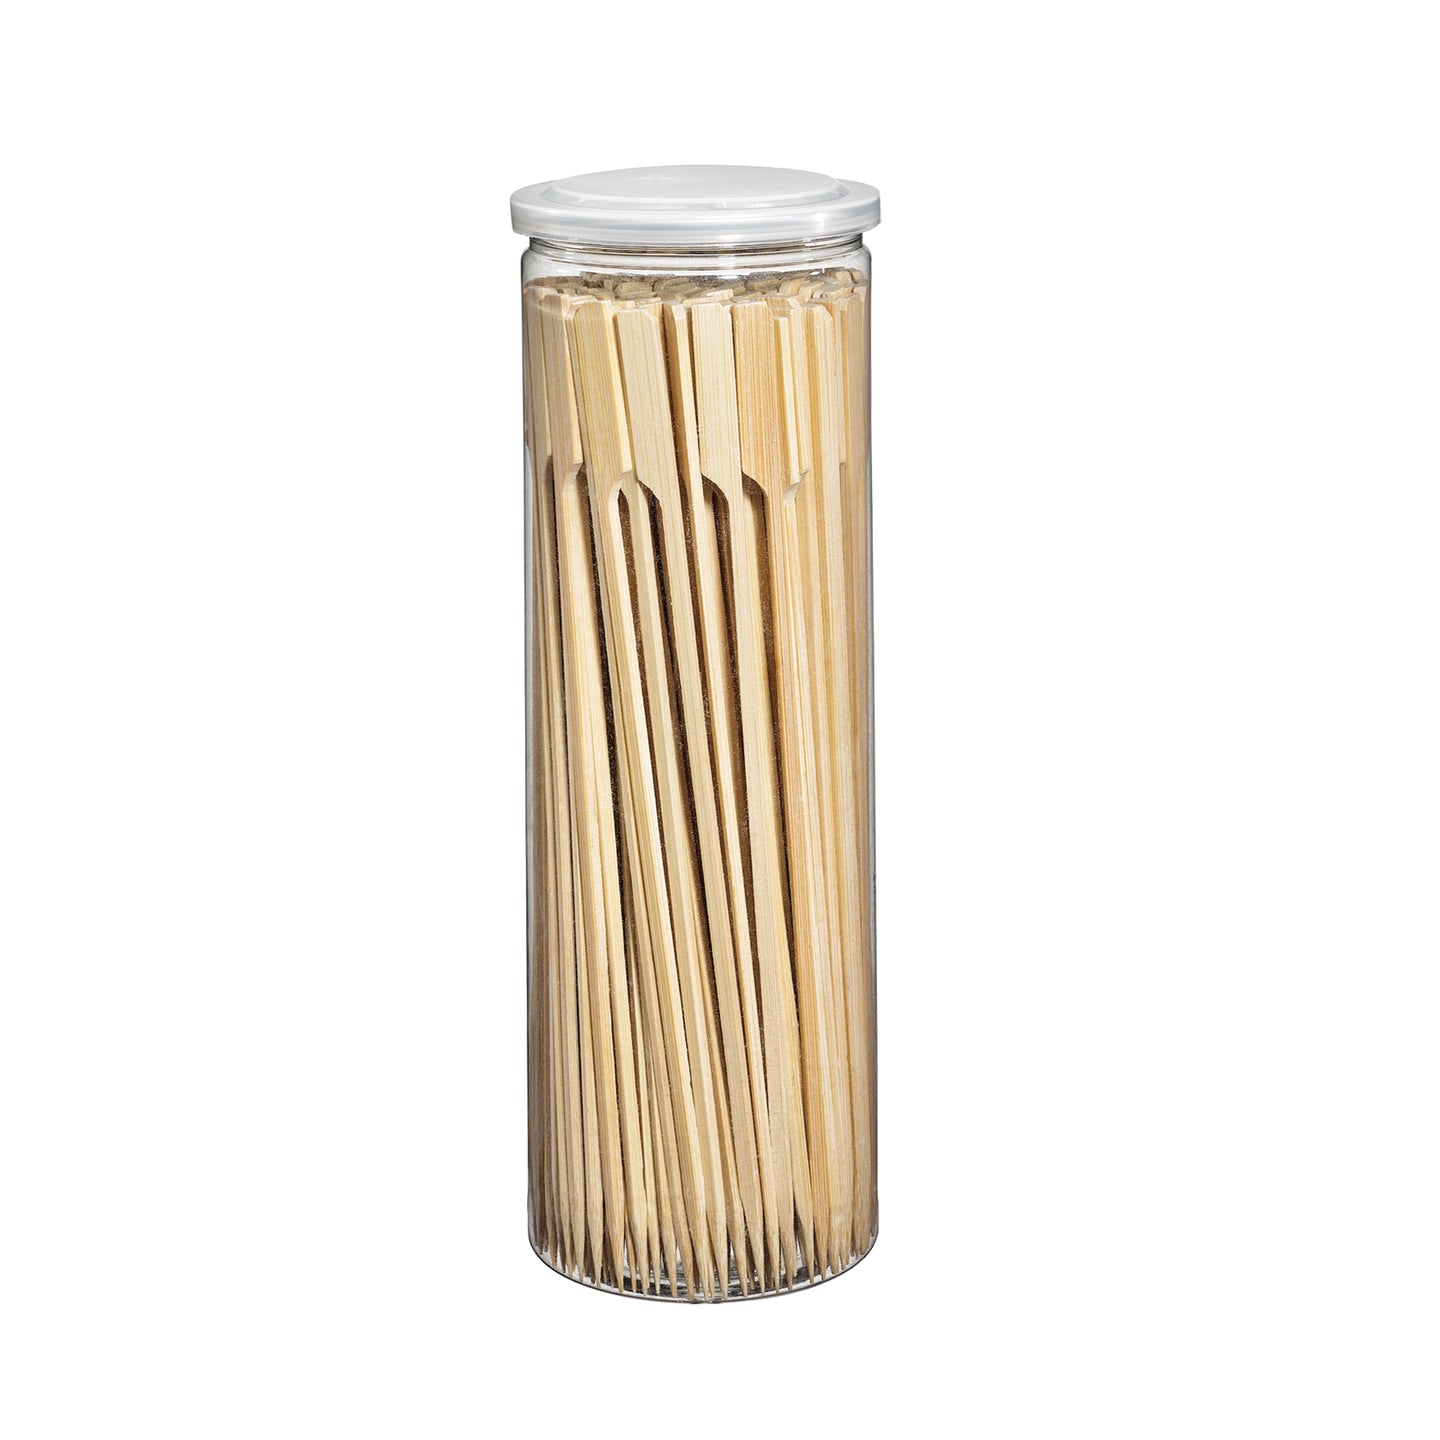 Kuchenprofi BBQ Bamboo Skewers / 23cm